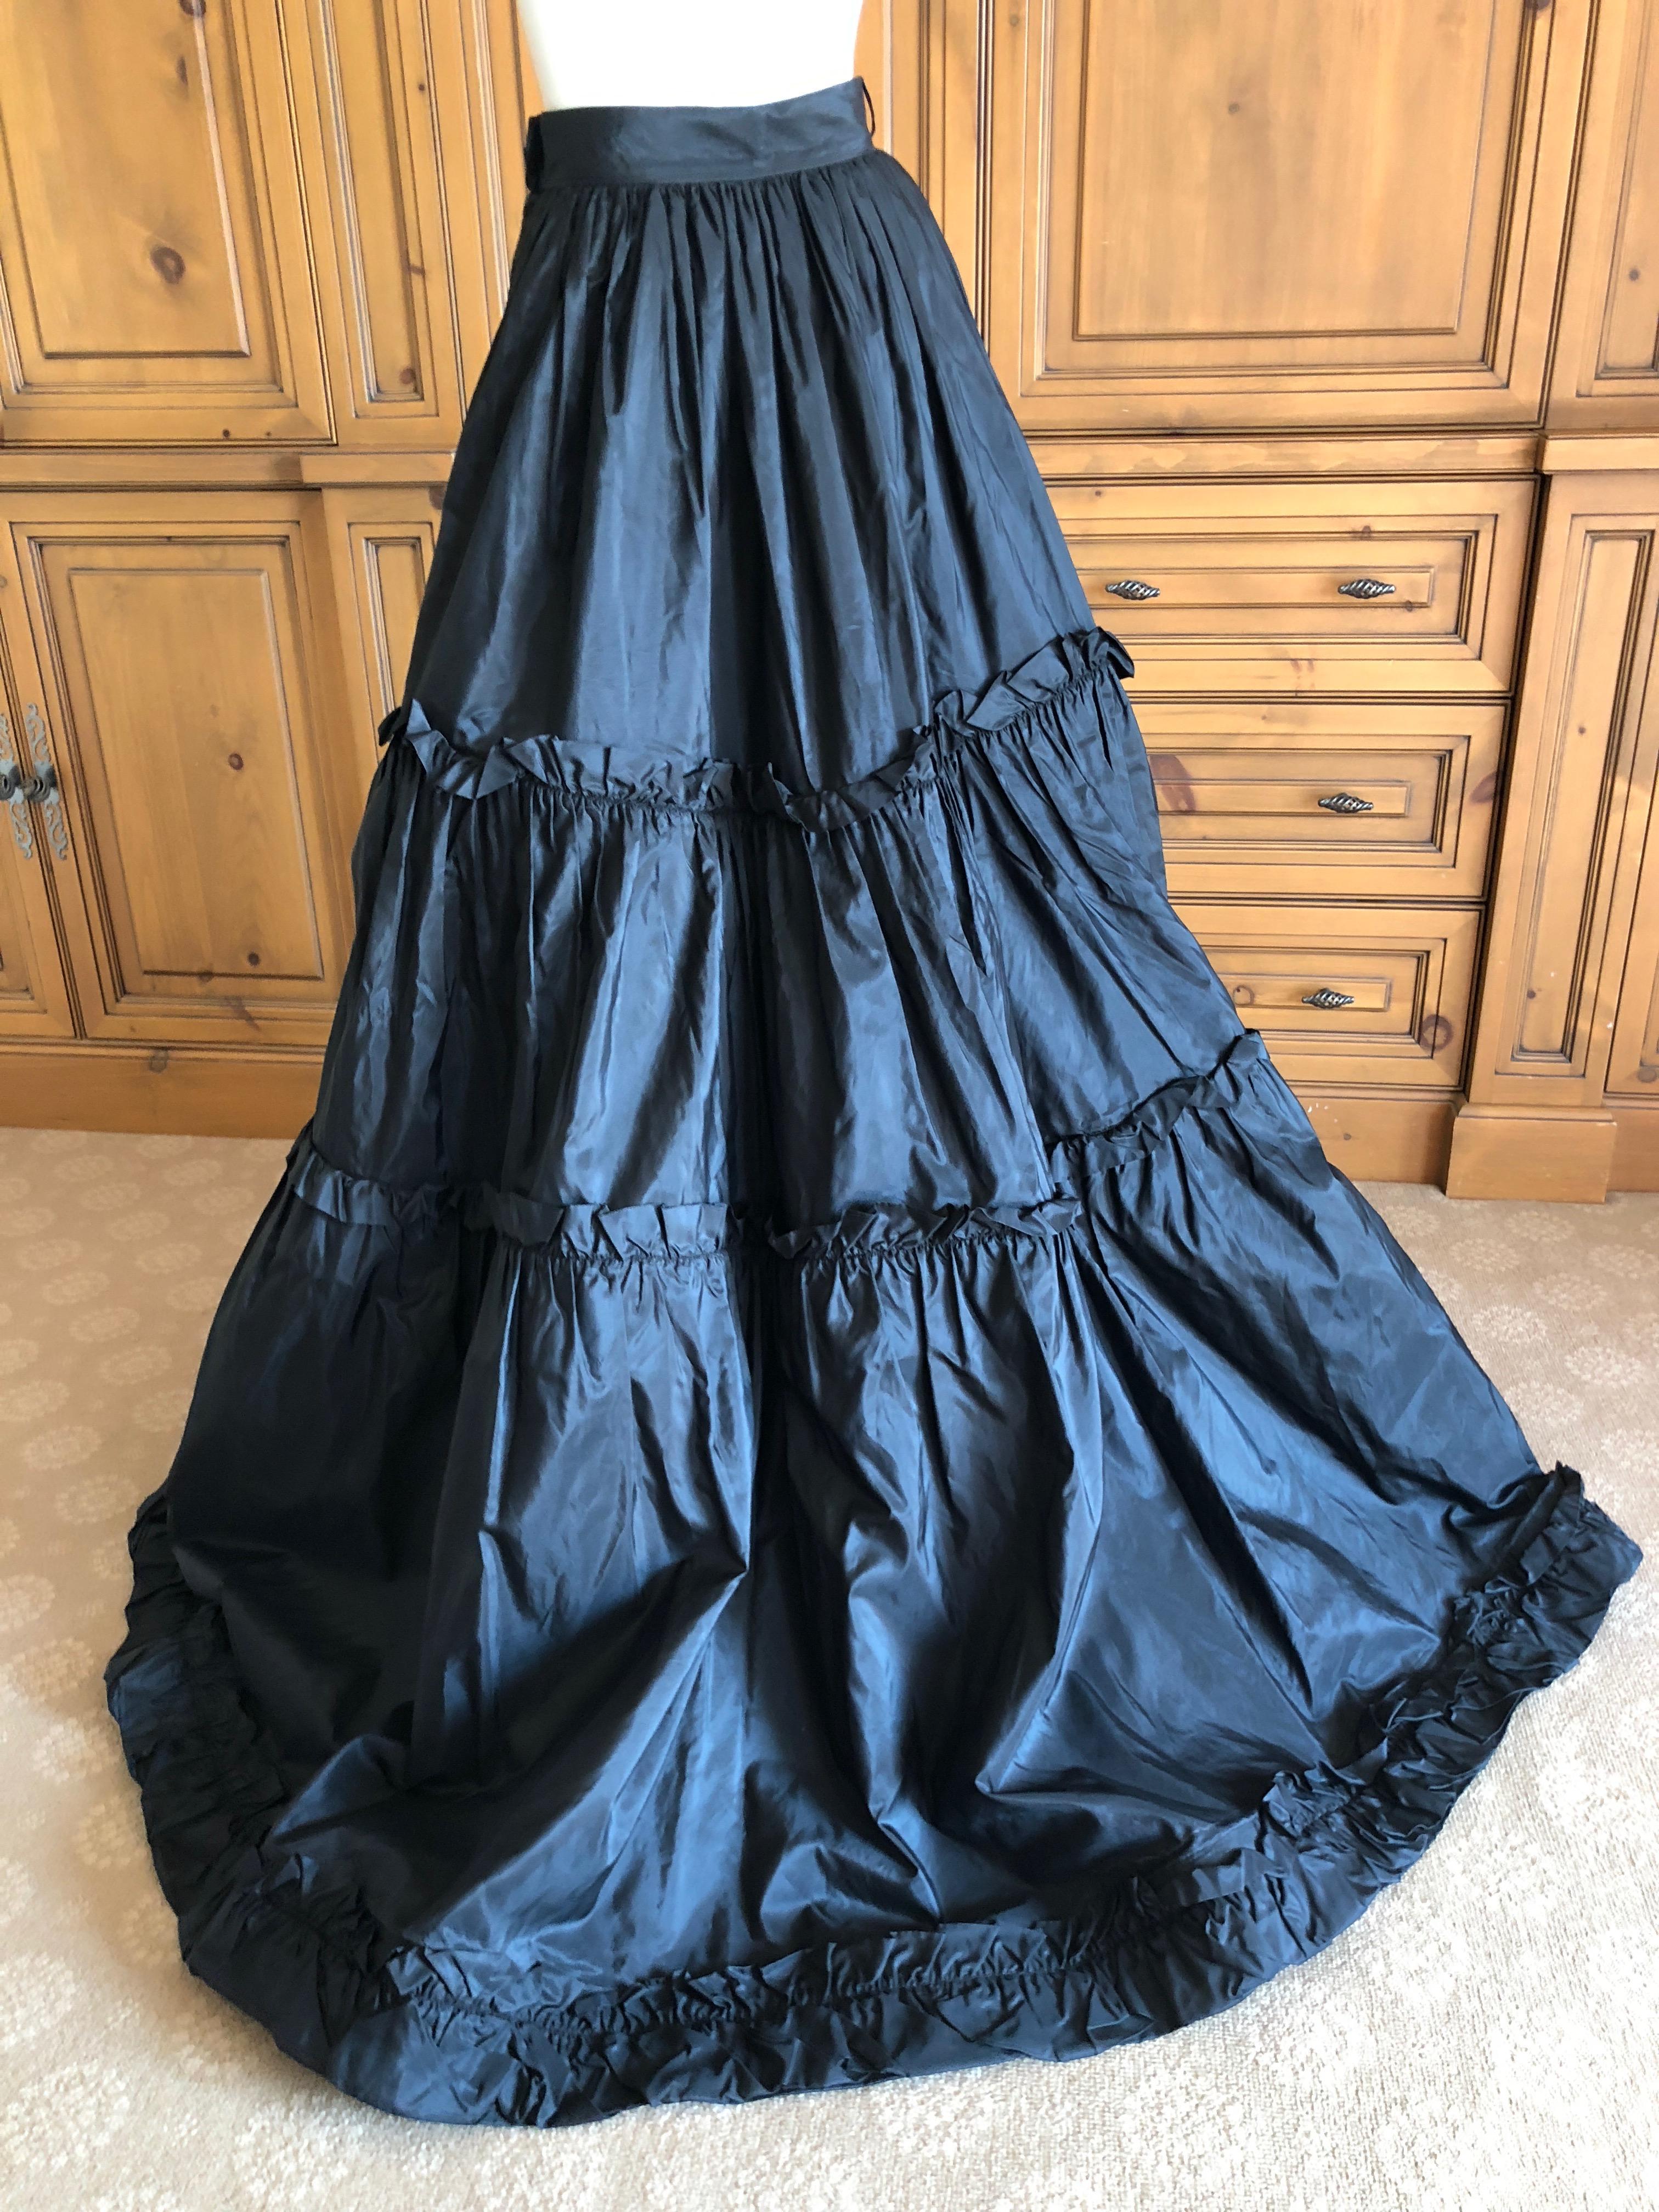 Yves Saint Laurent Rive Guache 1982 Dramatic Black Taffeta Ball Skirt with Train For Sale 5